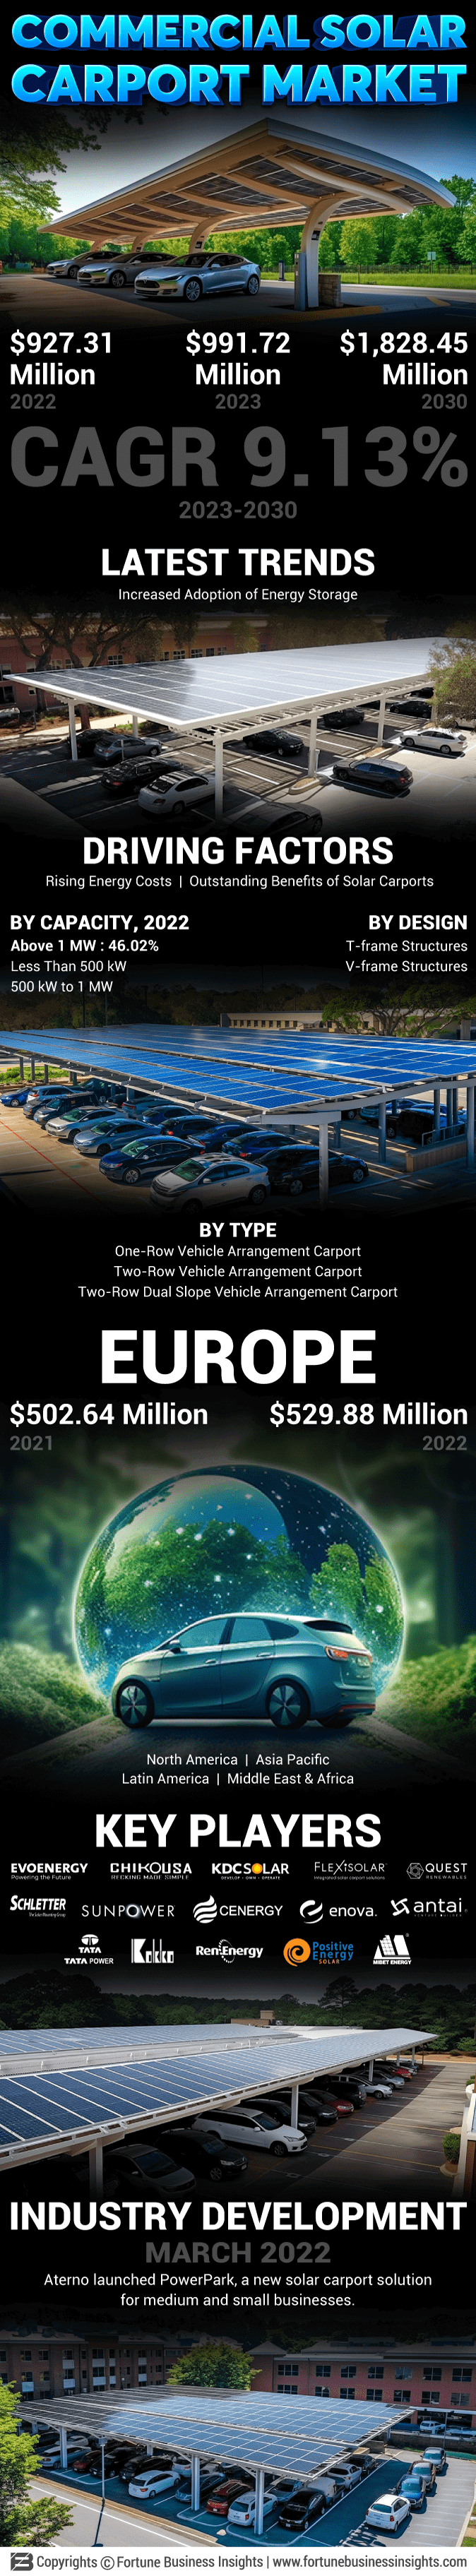 Commercial Solar Carport Market